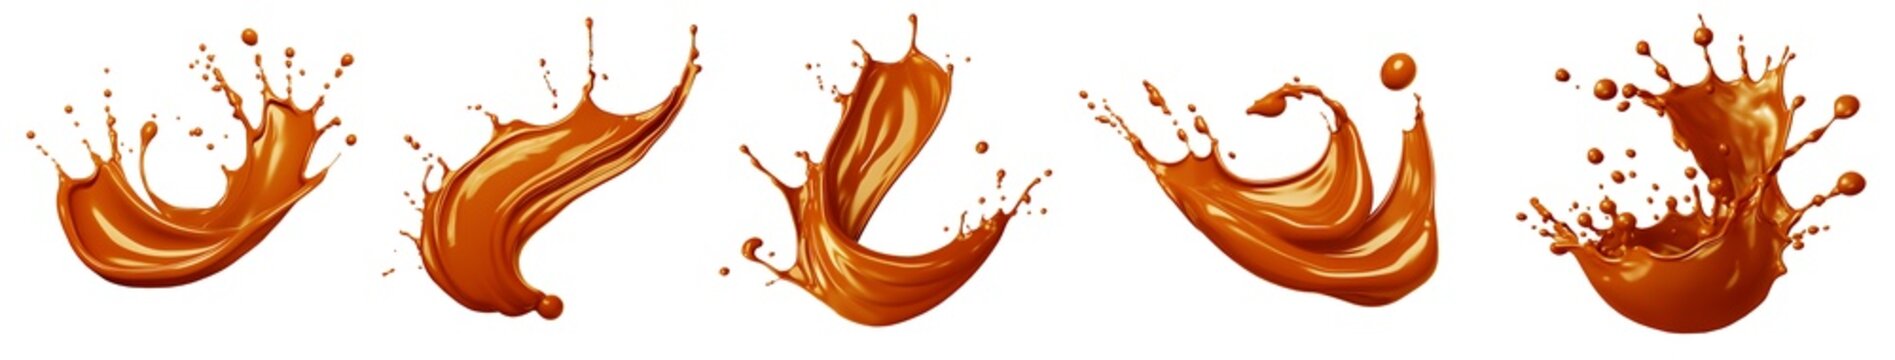 Orange Mustard brown cream liquid paint ink splash swirl wave on transparent background cutout, PNG file. Many assorted different design. Mockup template for artwork graphic design